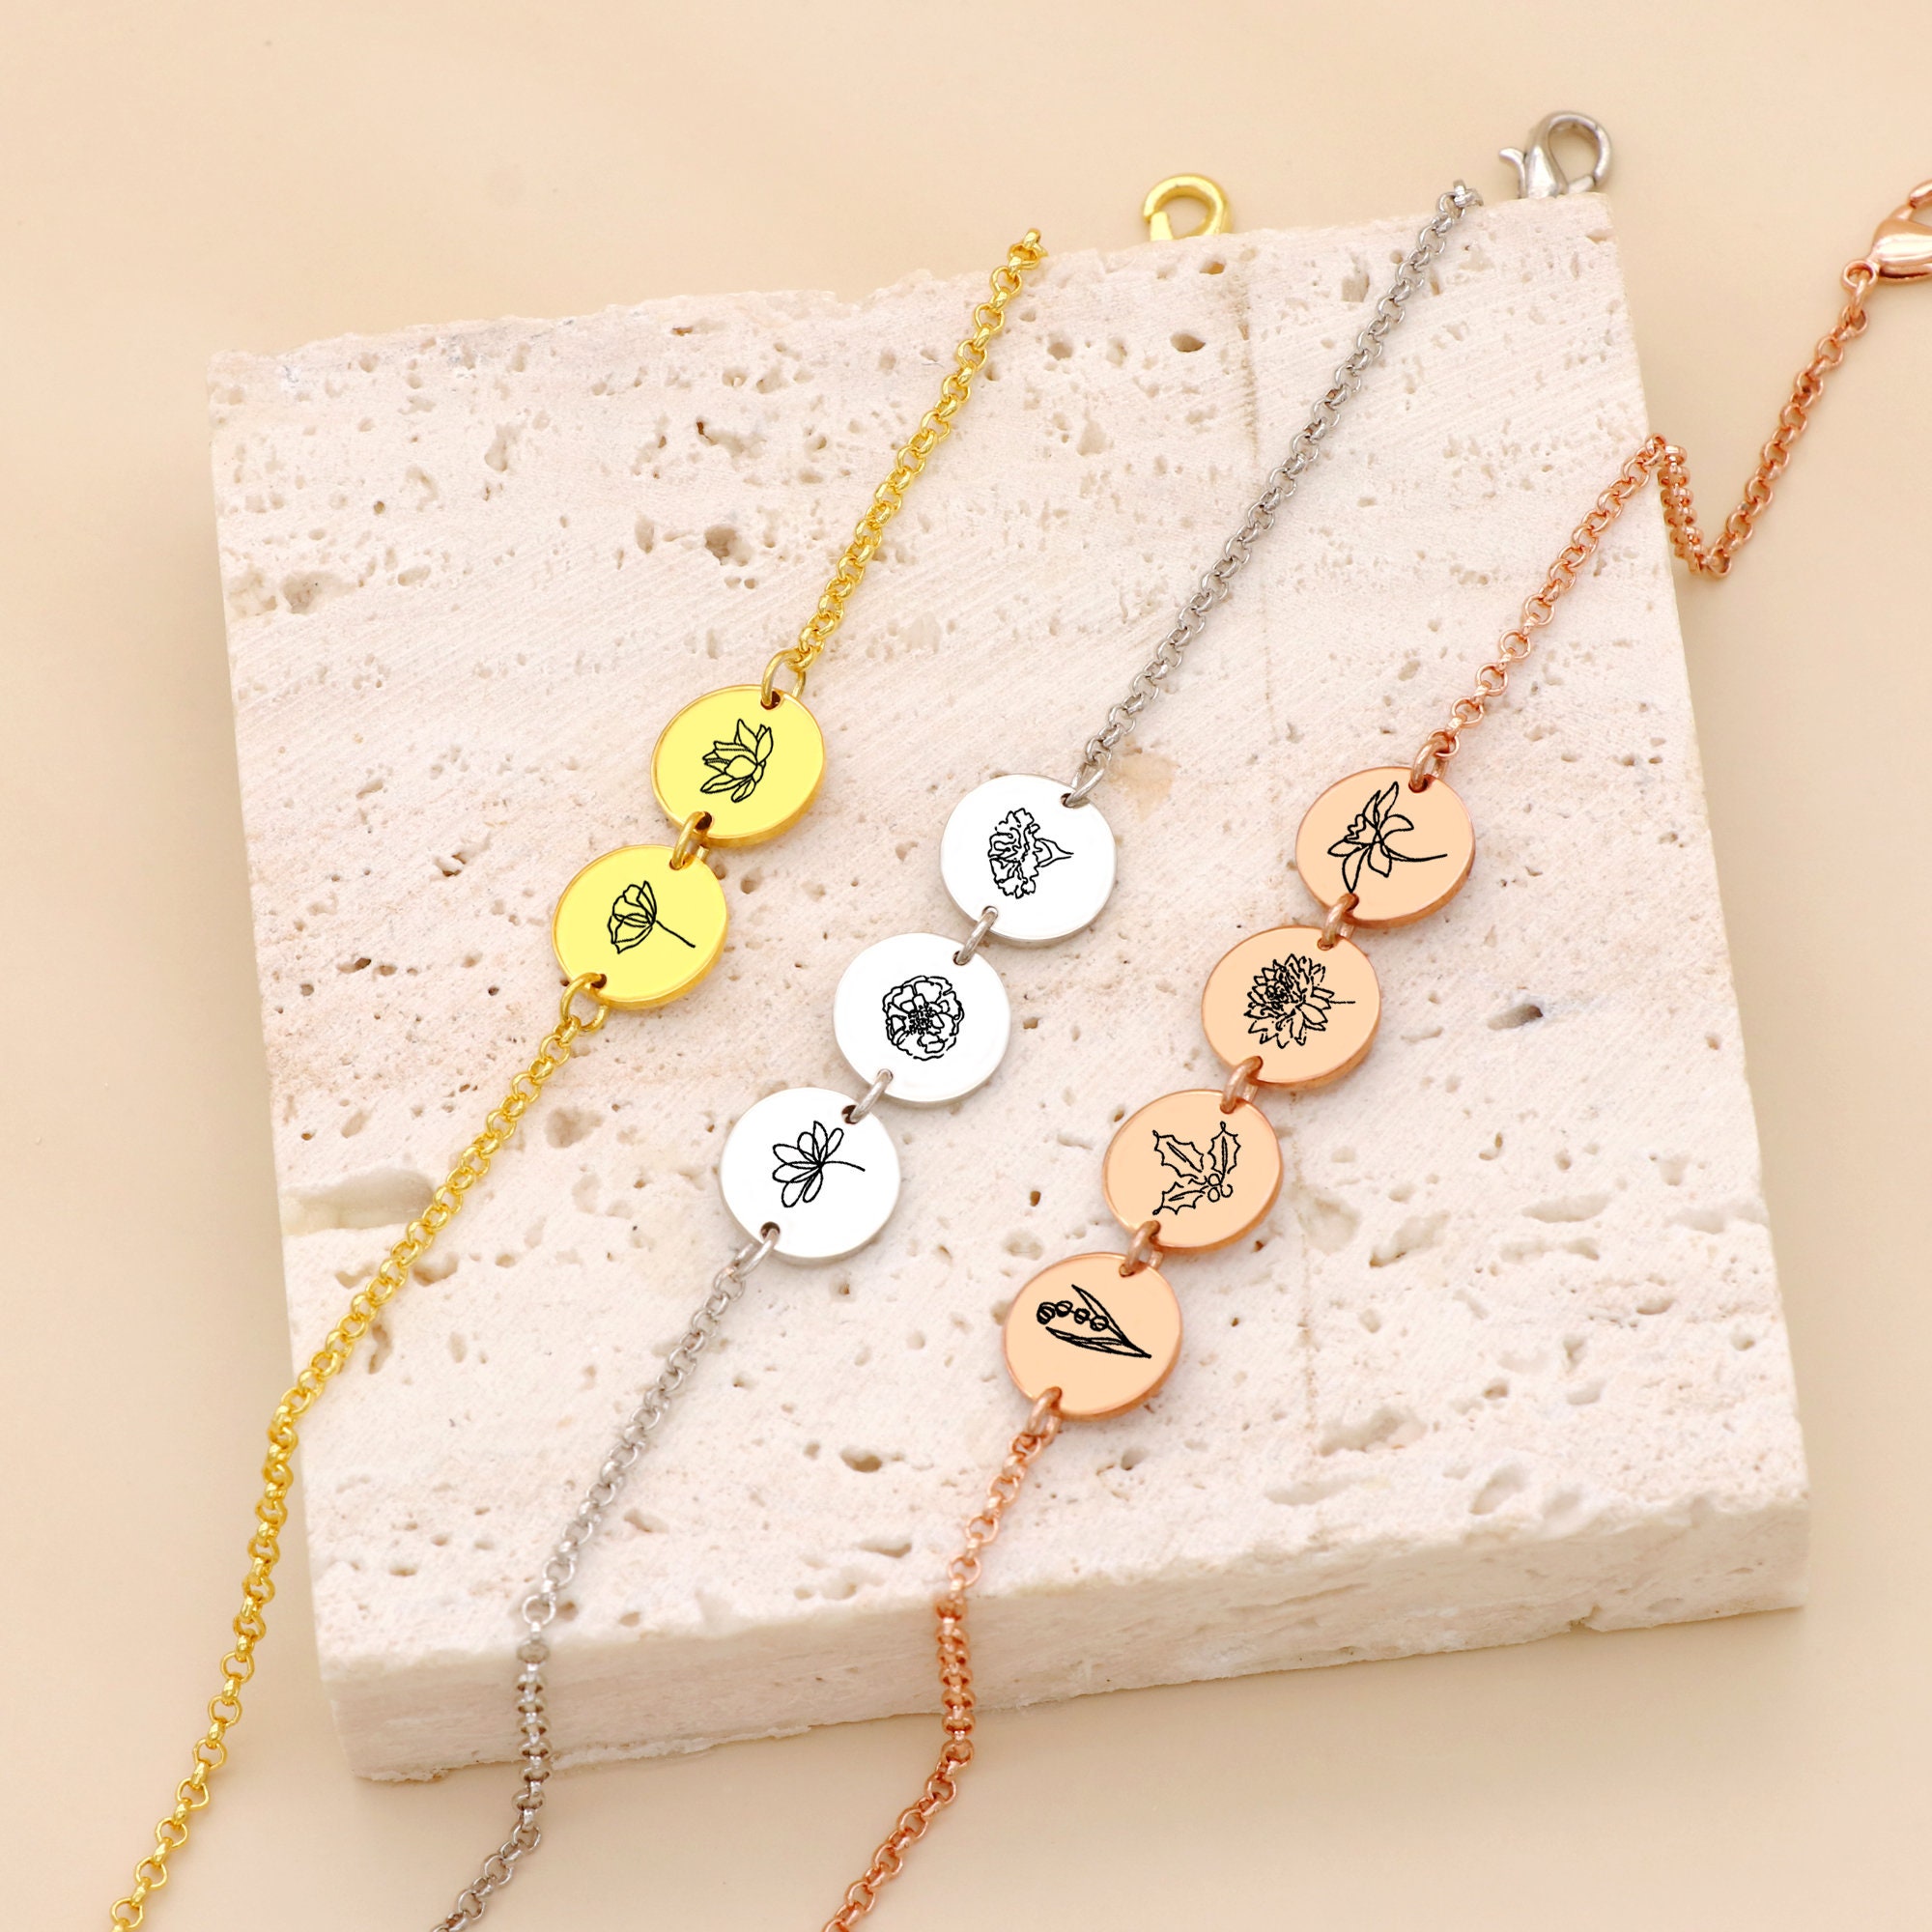 Hot Selling Brand L $V Fashion Casual Letter Bracelet Necklace